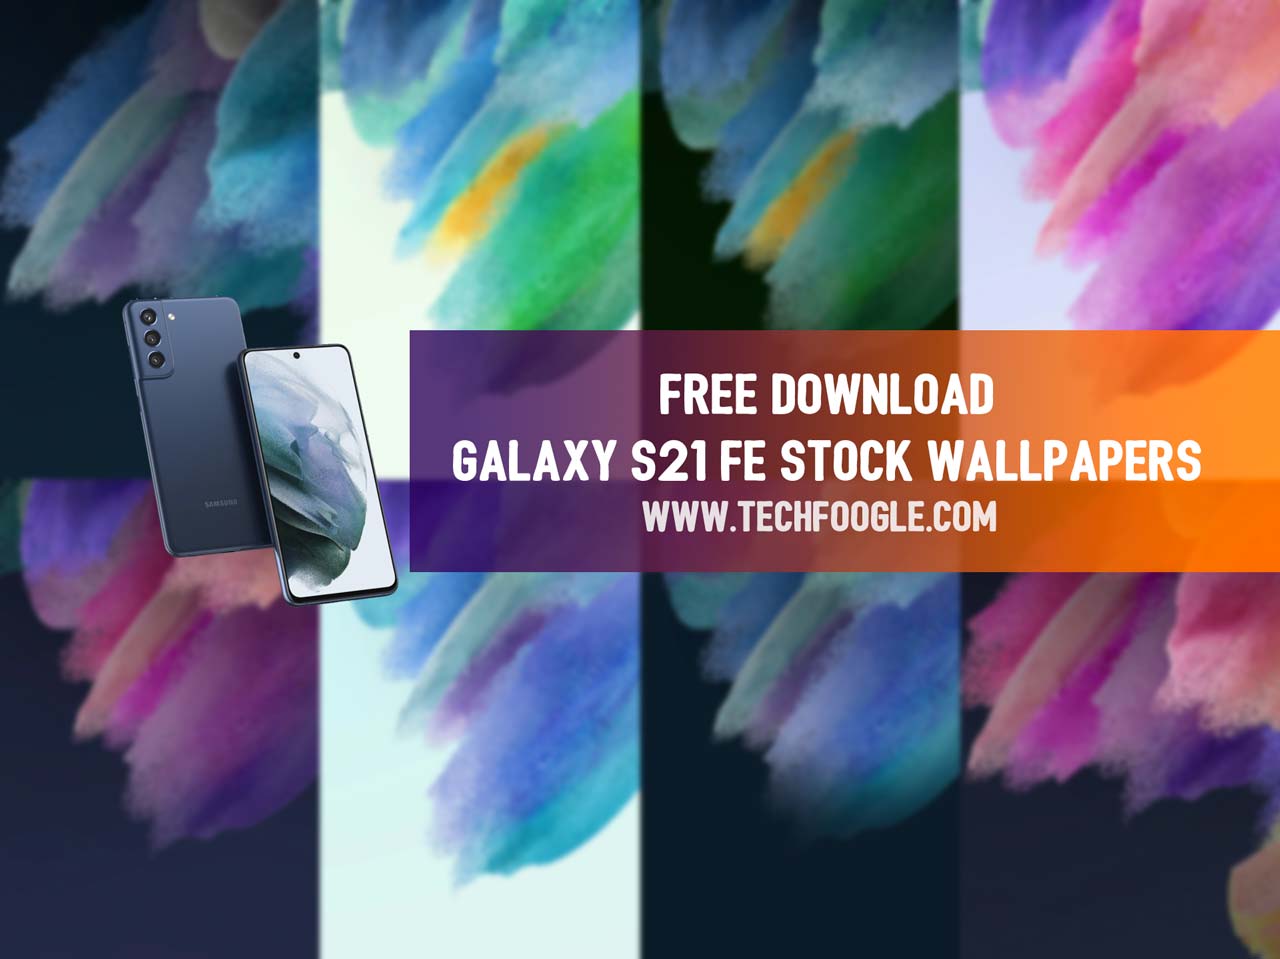 Samsung Galaxy S21 Fe Stock Wallpaper Leaked